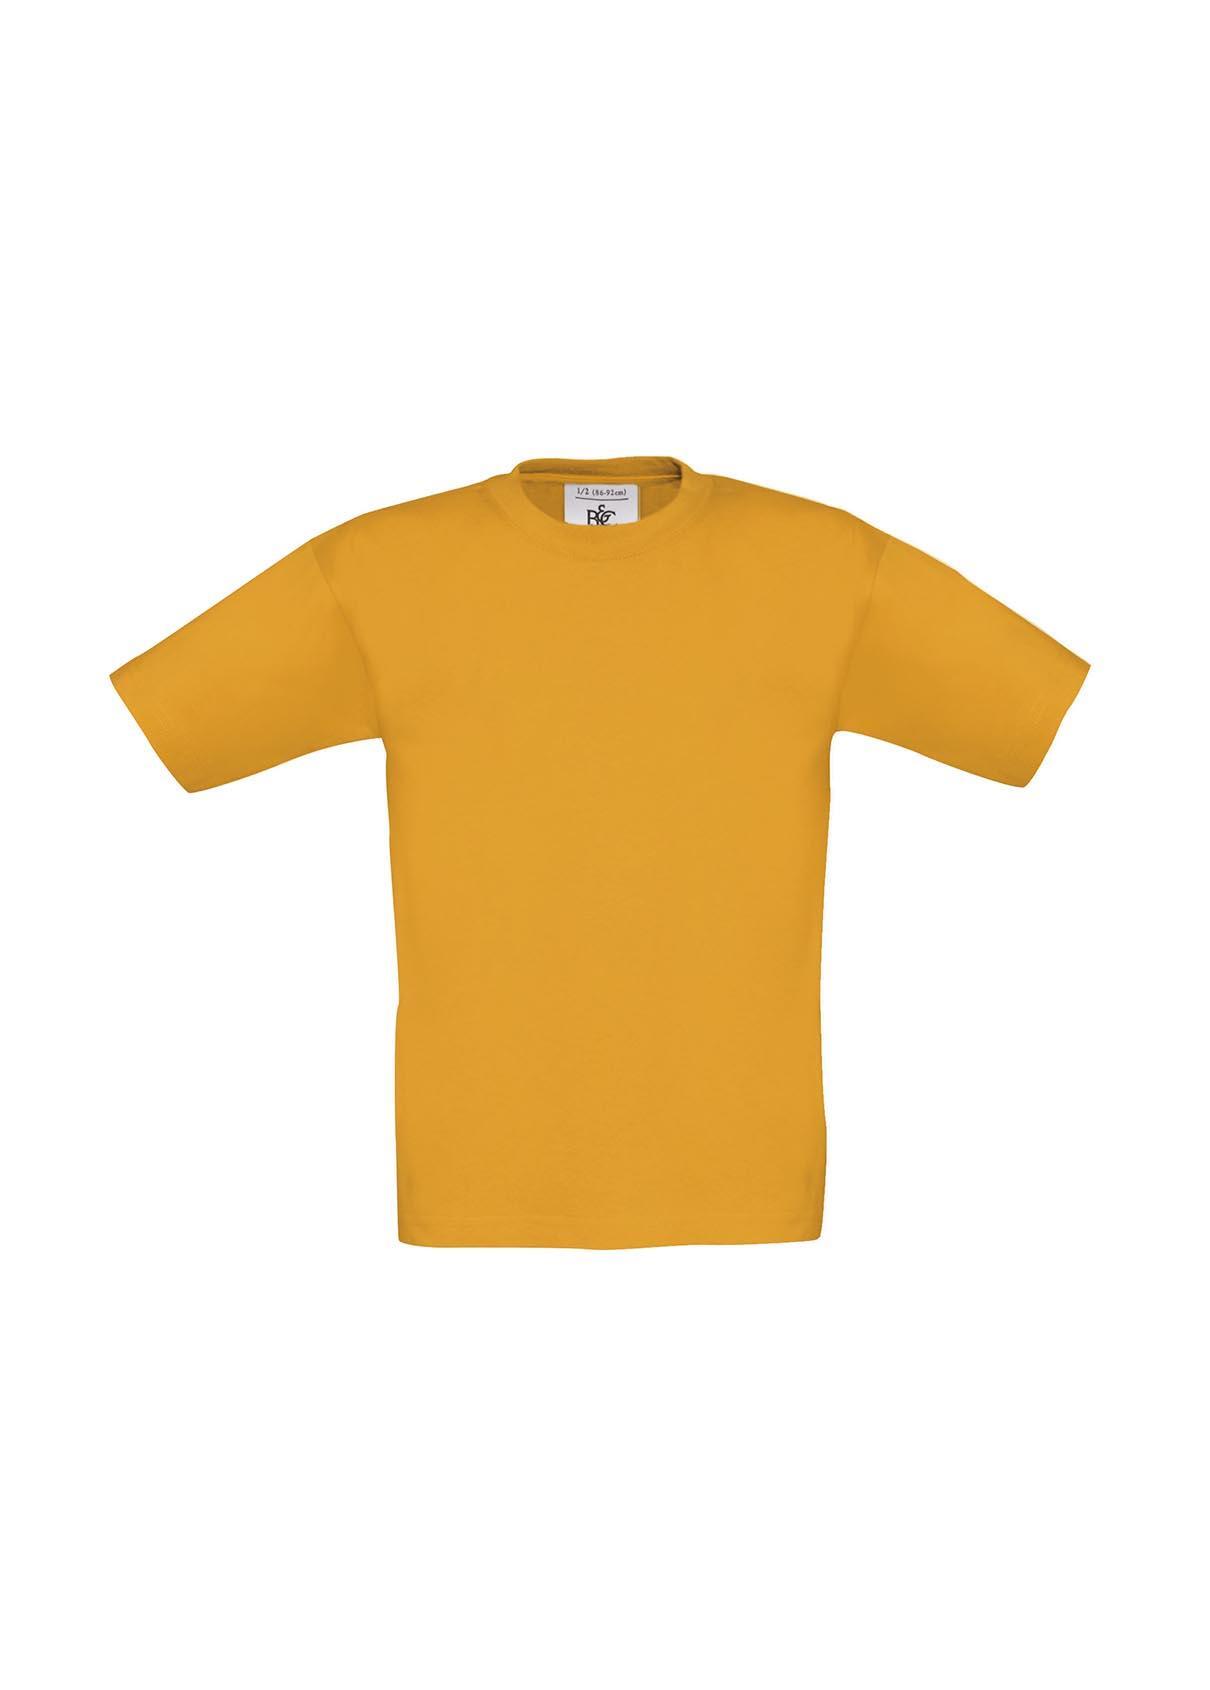 T-shirt voor kids abrikoos kleur kinder shirt